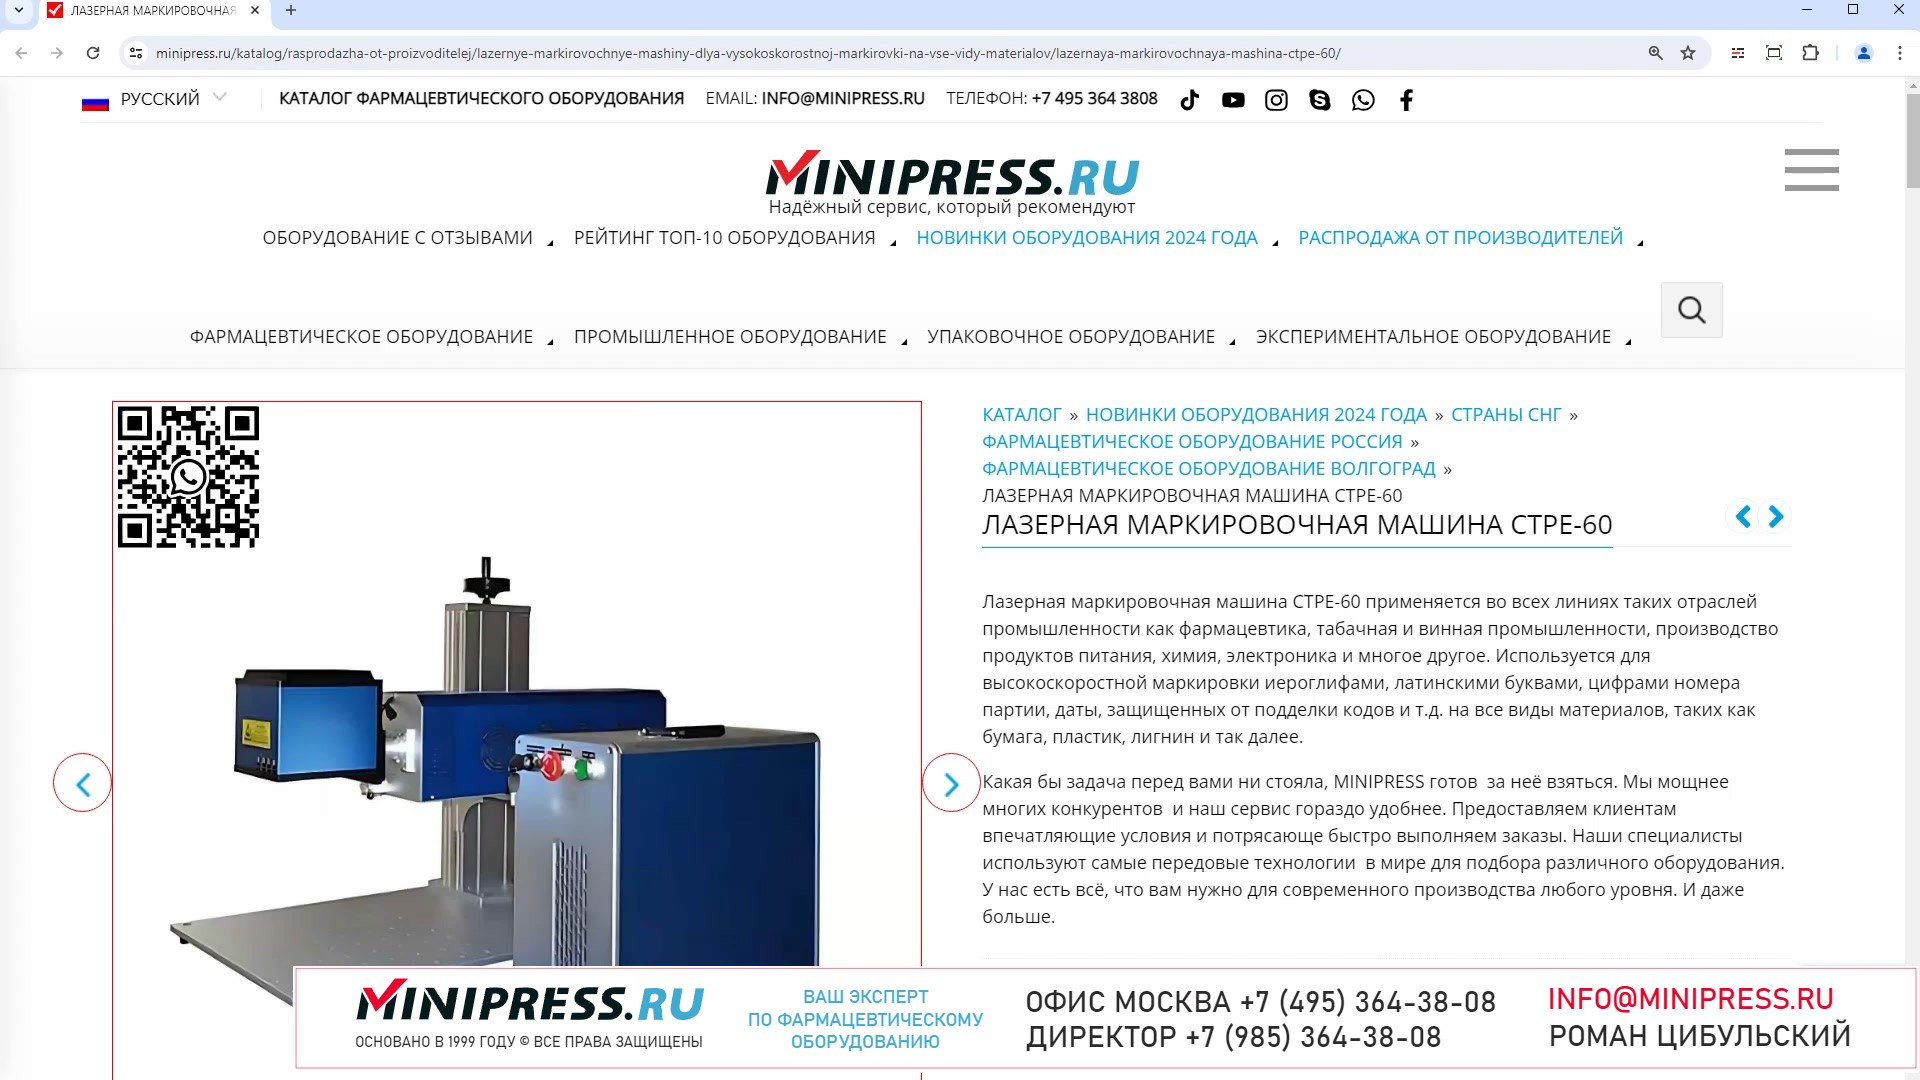 Minipress.ru Лазерная маркировочная машина CTPE-60